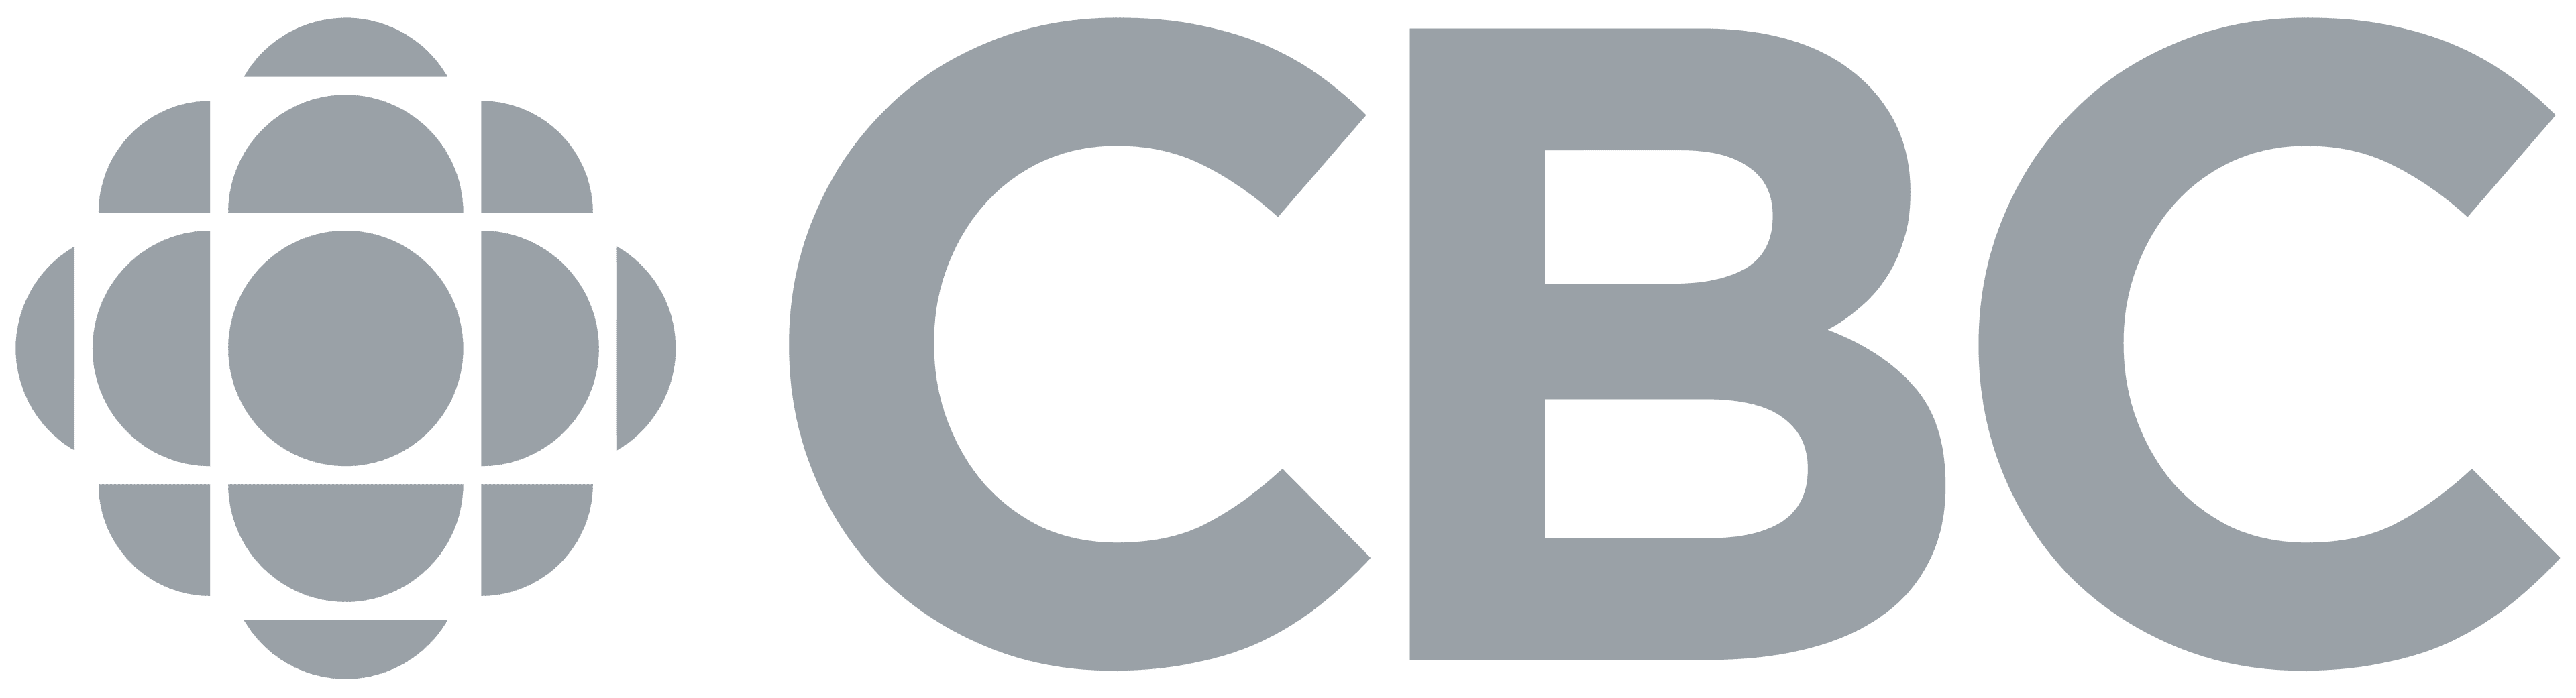 cbc-logo.png